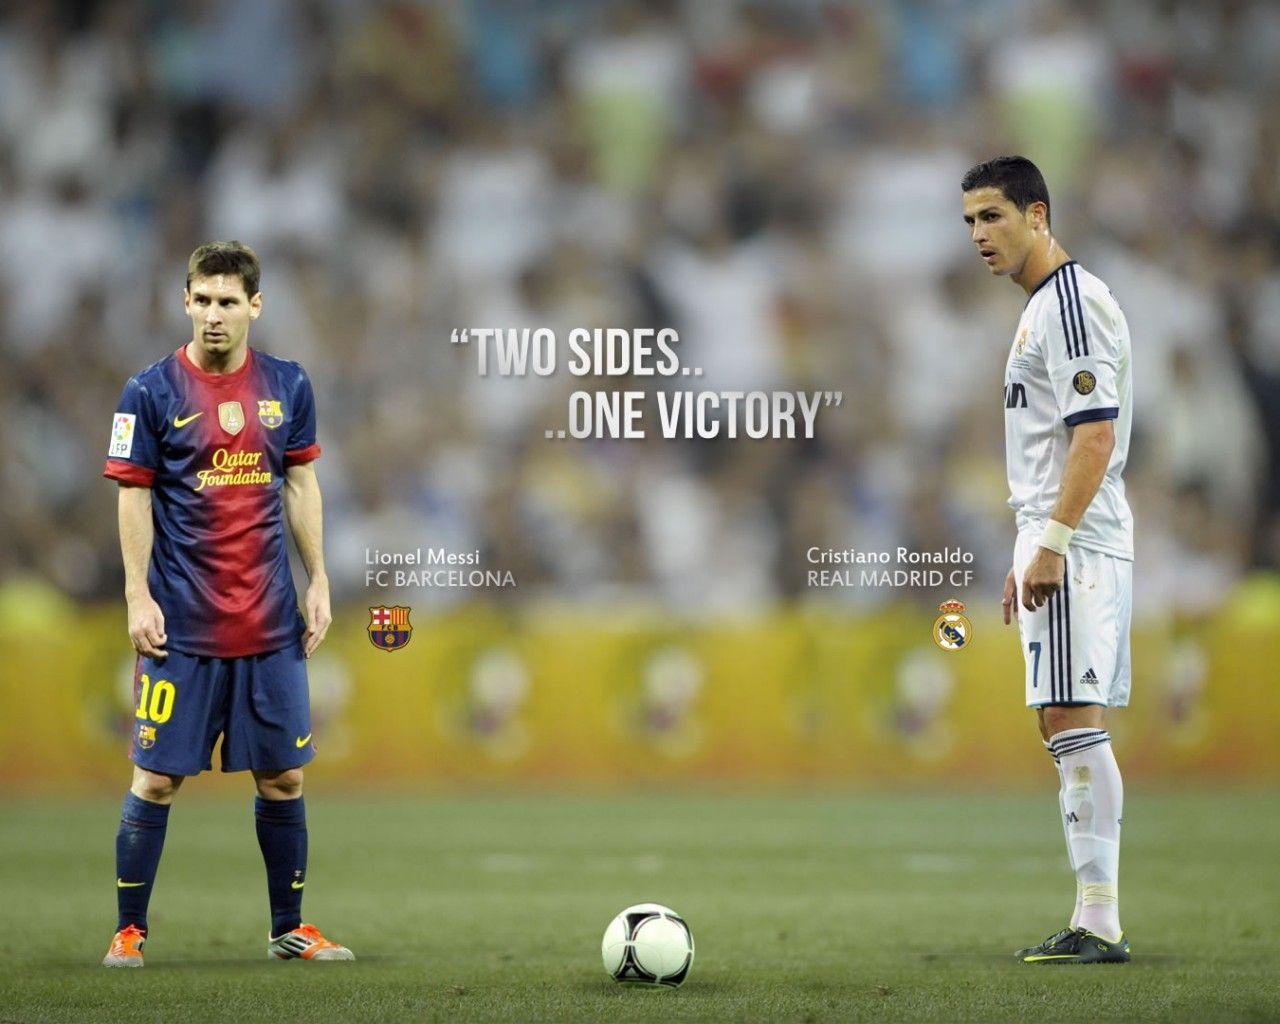 Ronaldo and Messi wallpaper